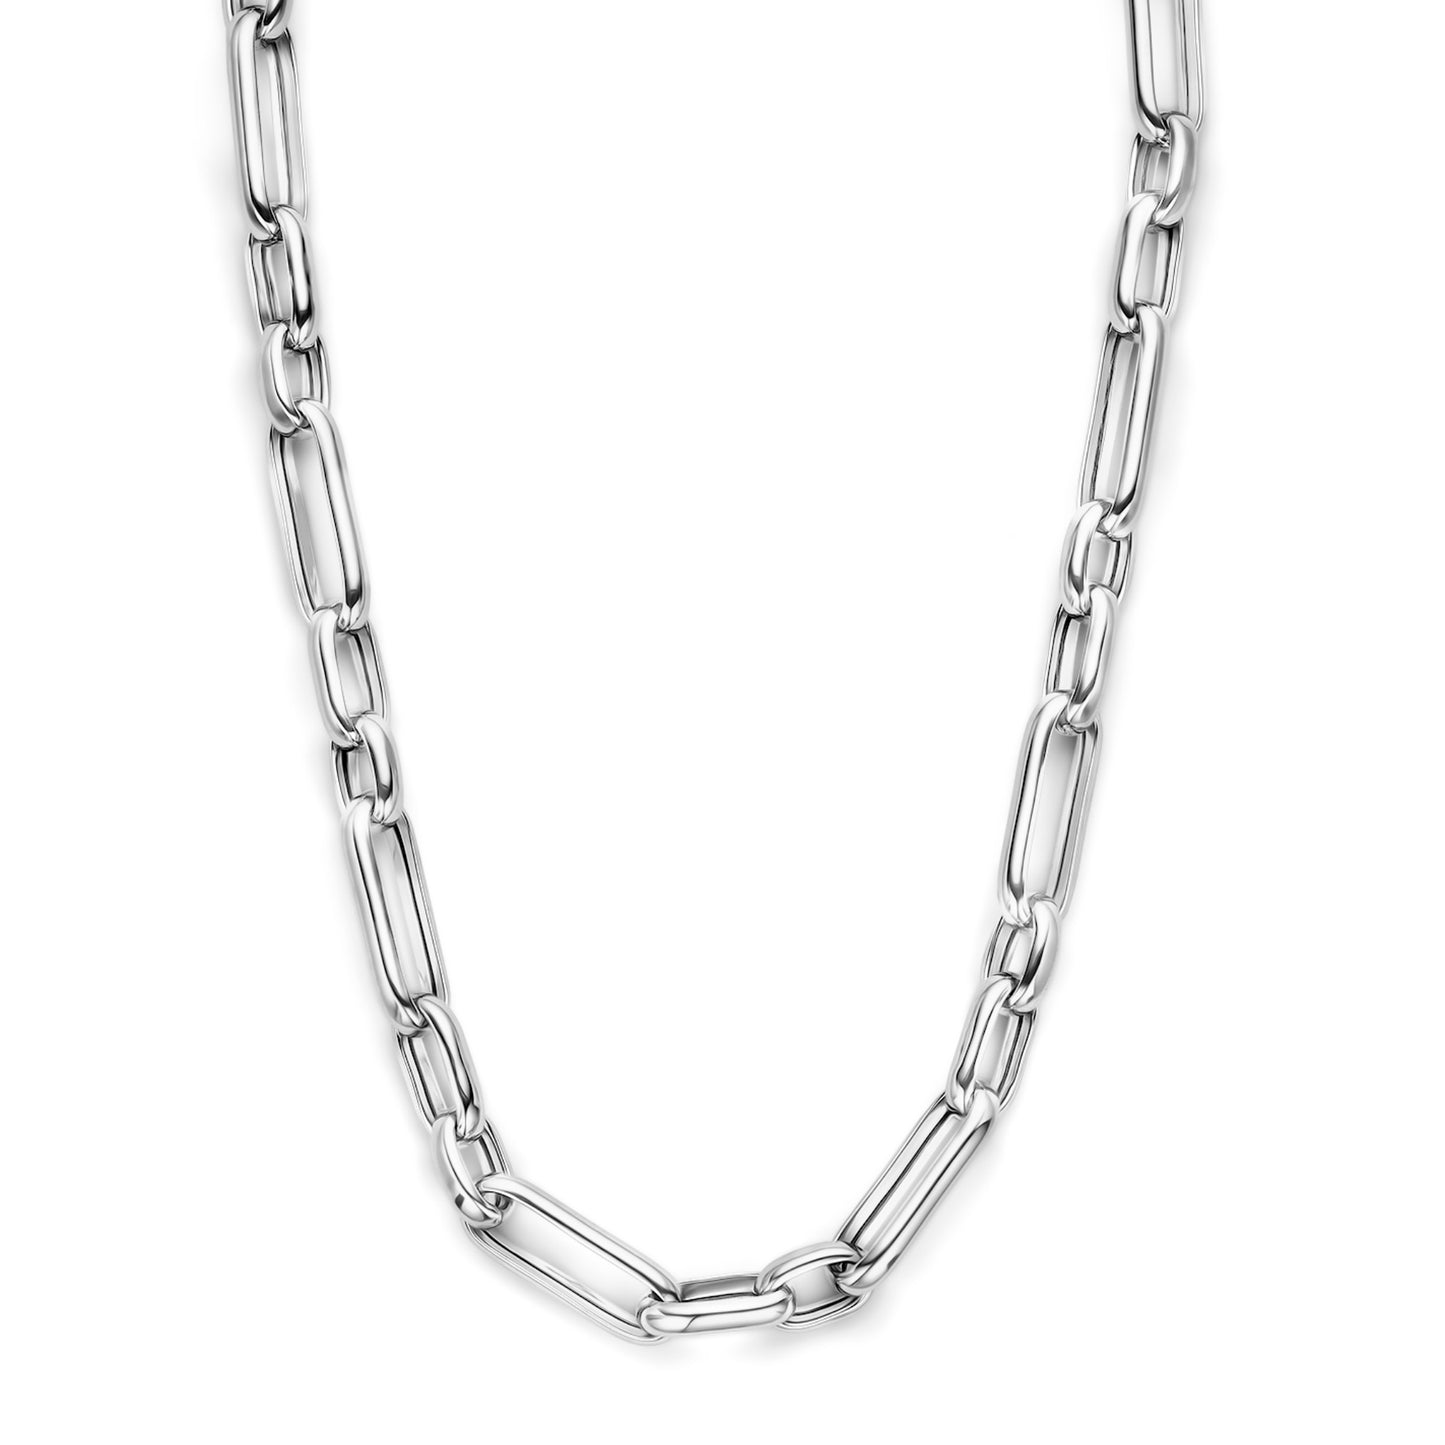 Bibbiena Poppi Casentino 925 sterling silver link necklace